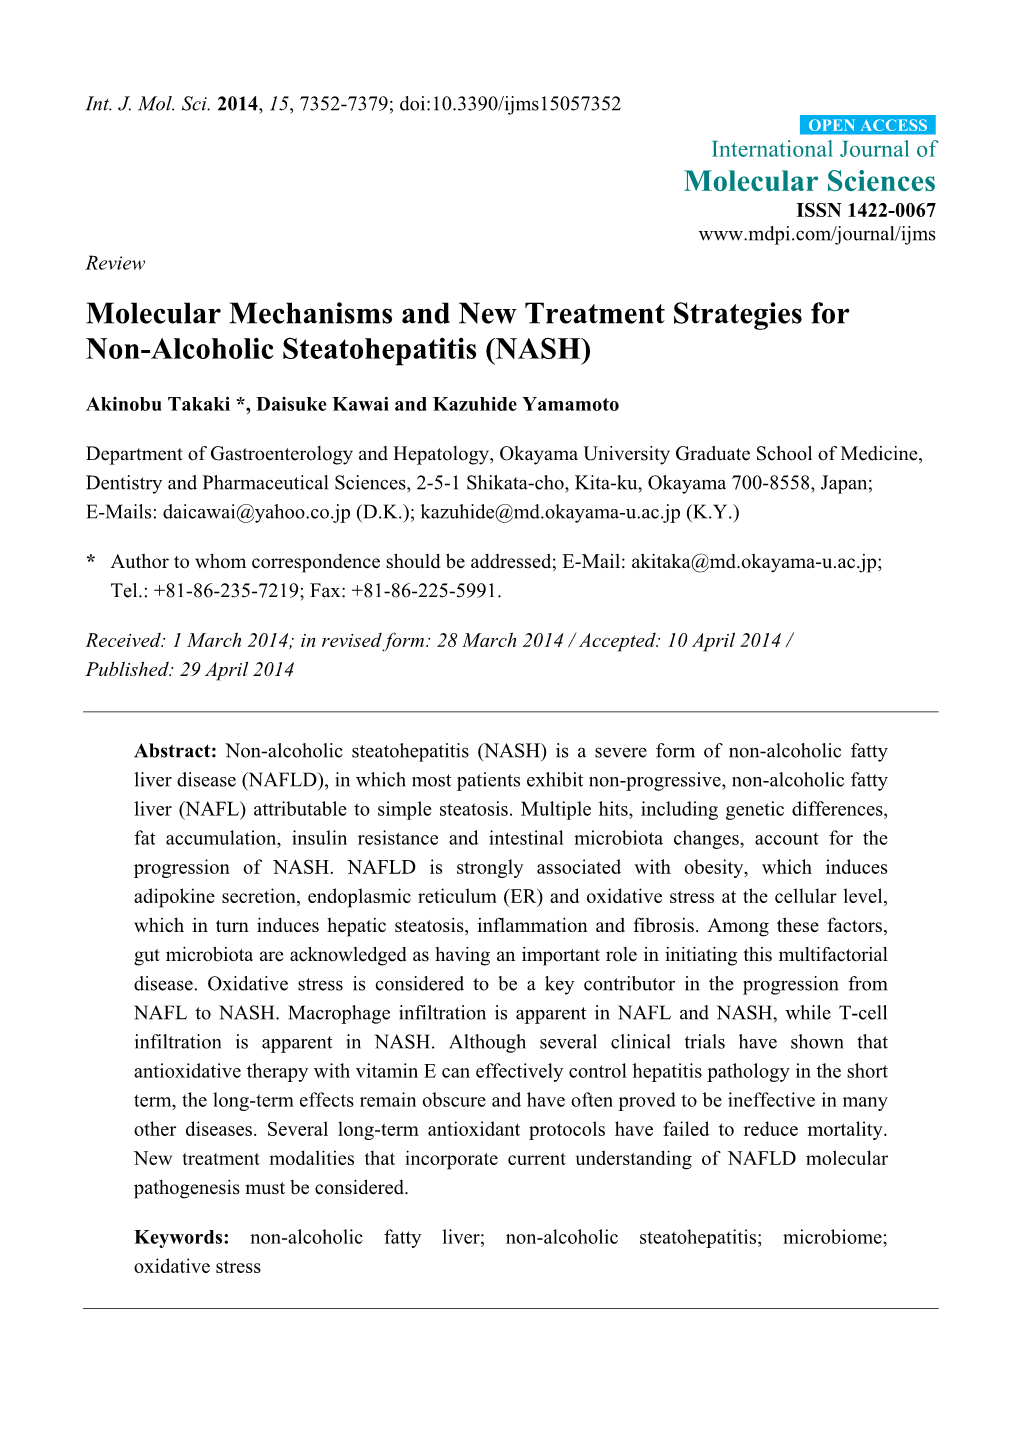 Molecular Mechanisms and New Treatment Strategies for Non-Alcoholic Steatohepatitis (NASH)